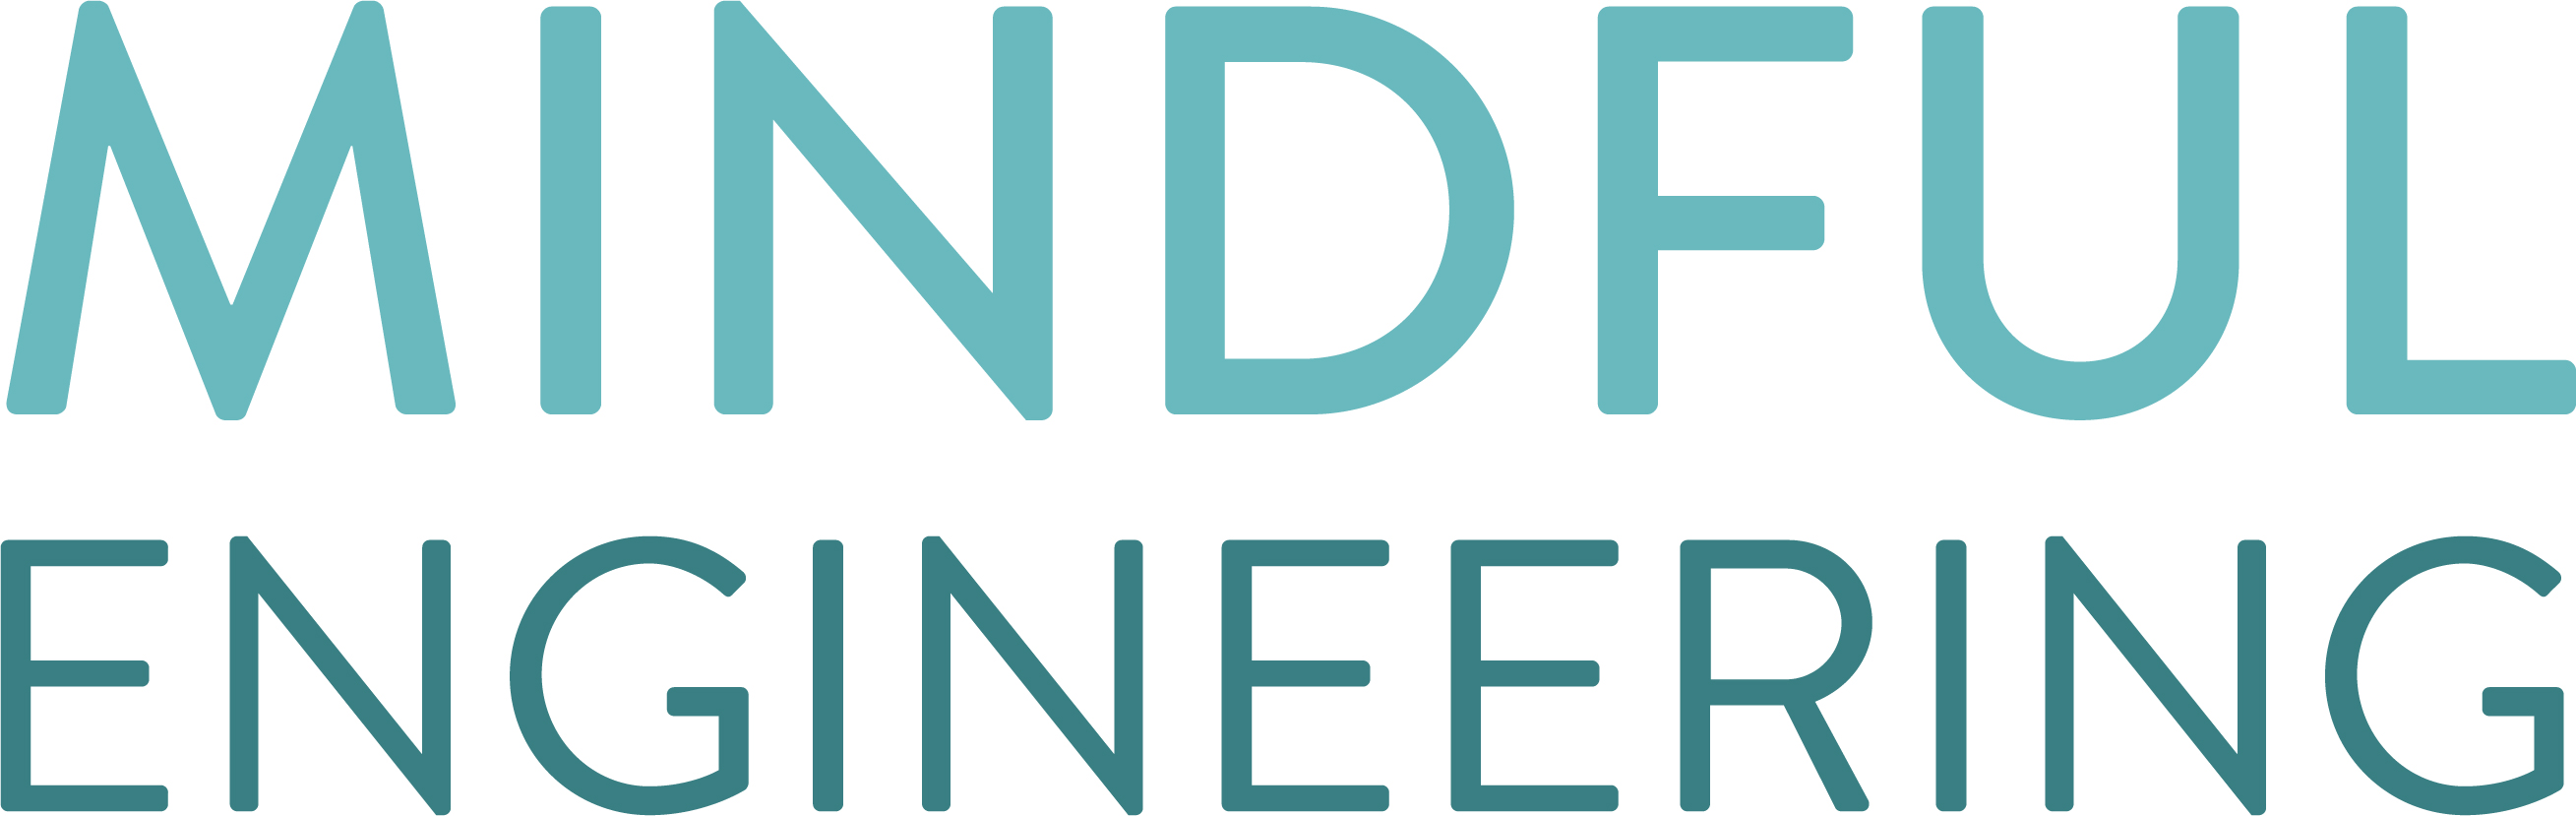 Mindful Engineering logo